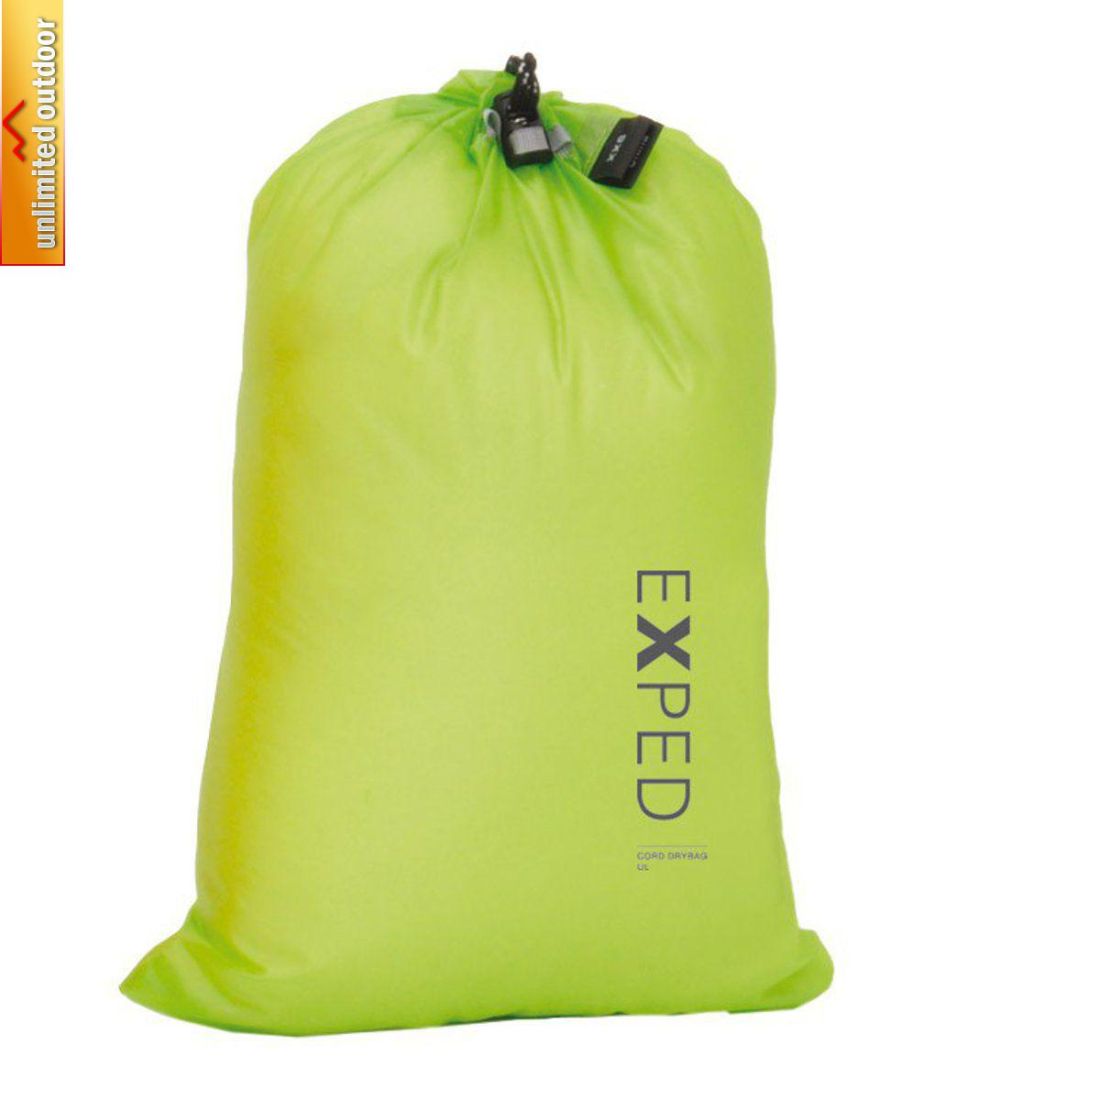 Exped - Гермомешок влагозащитный Cord-Drybag UL